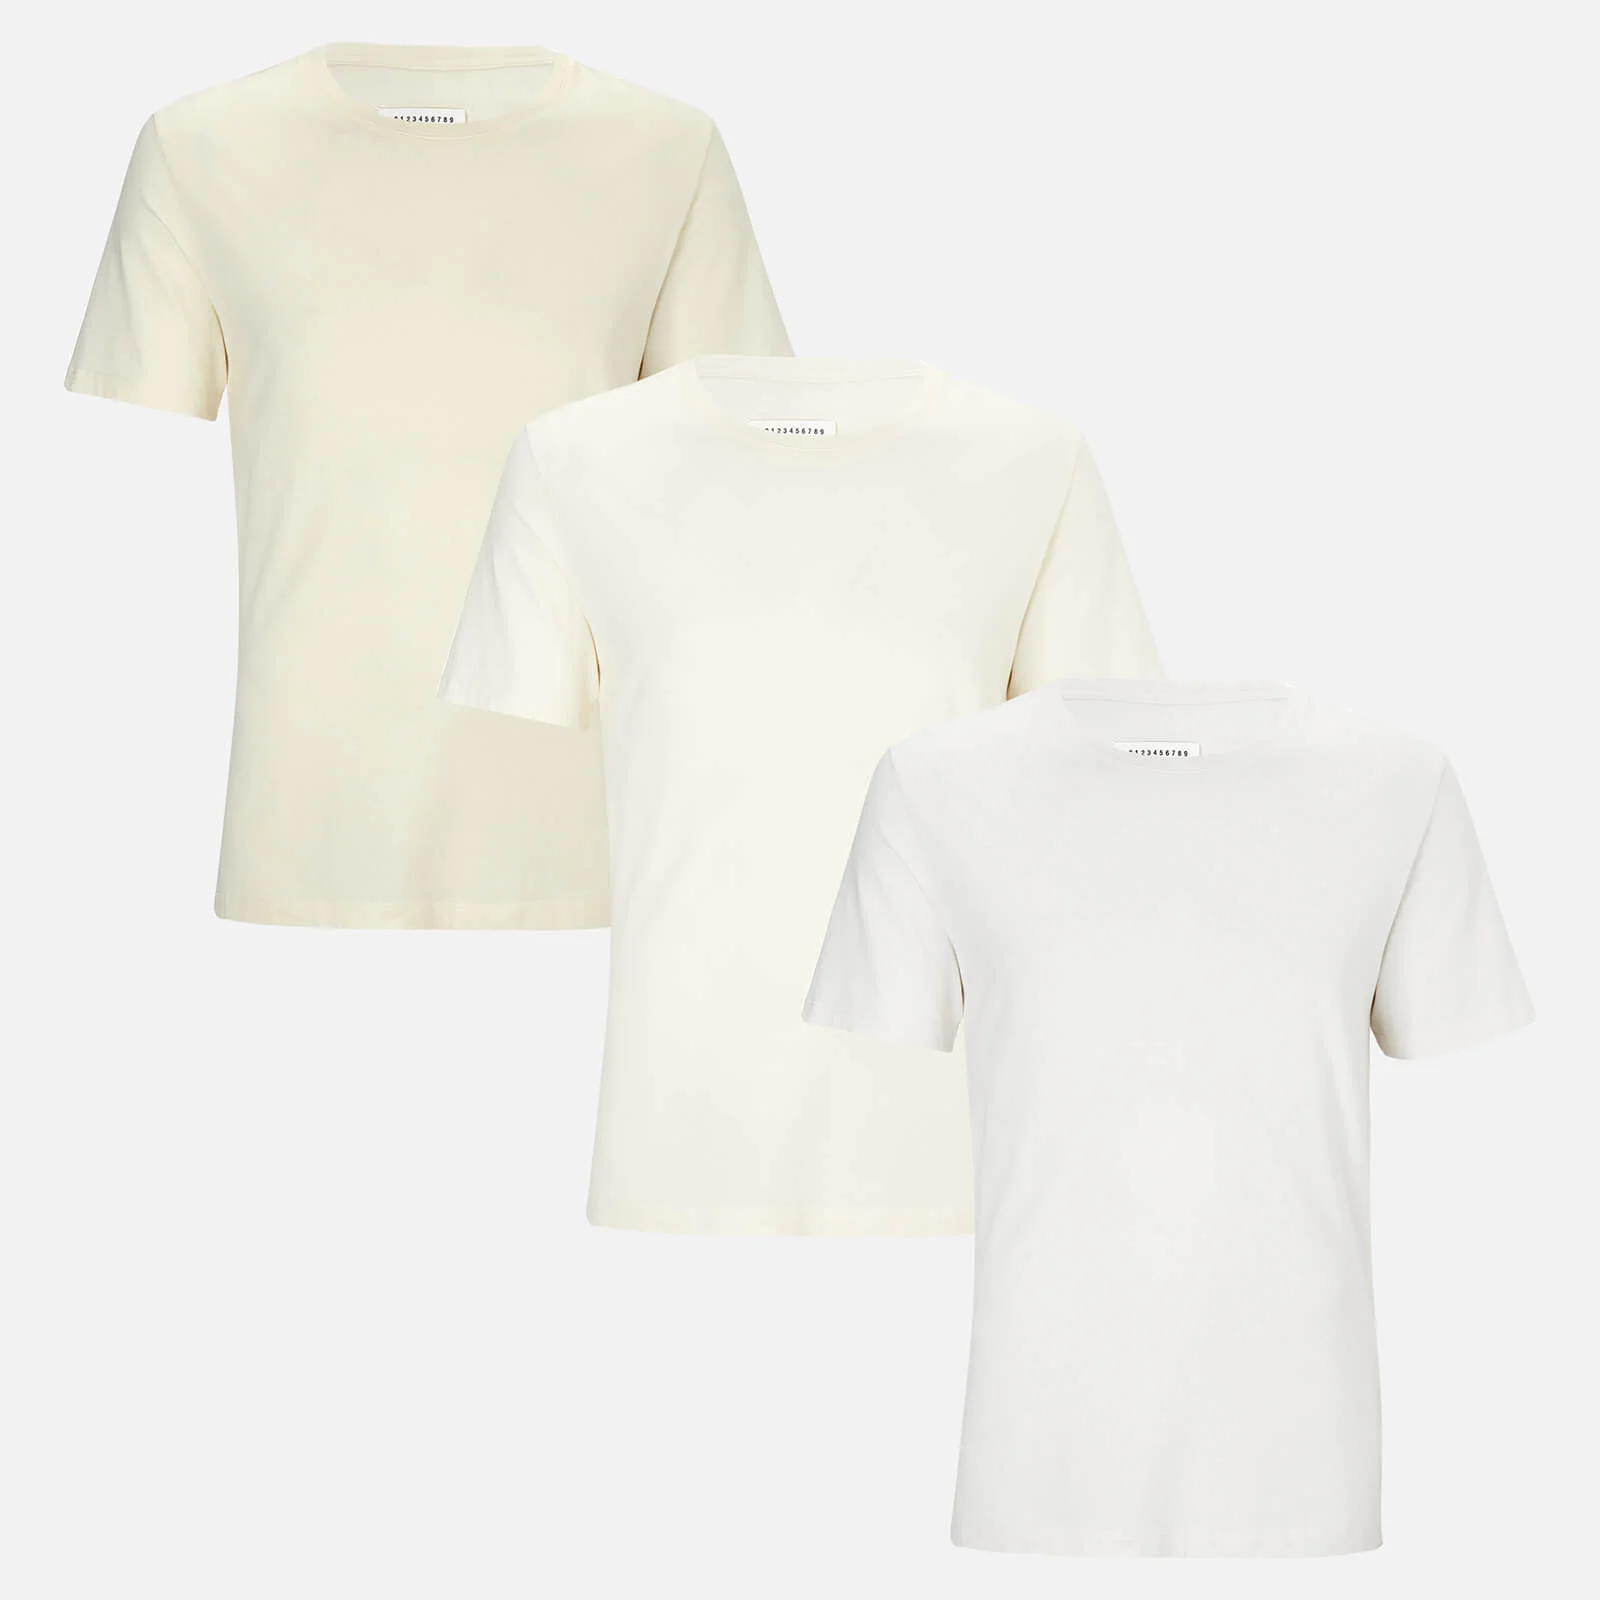 Maison Margiela Men's 3 Pack T-Shirts - Optic White/Off White/Cream Image 1